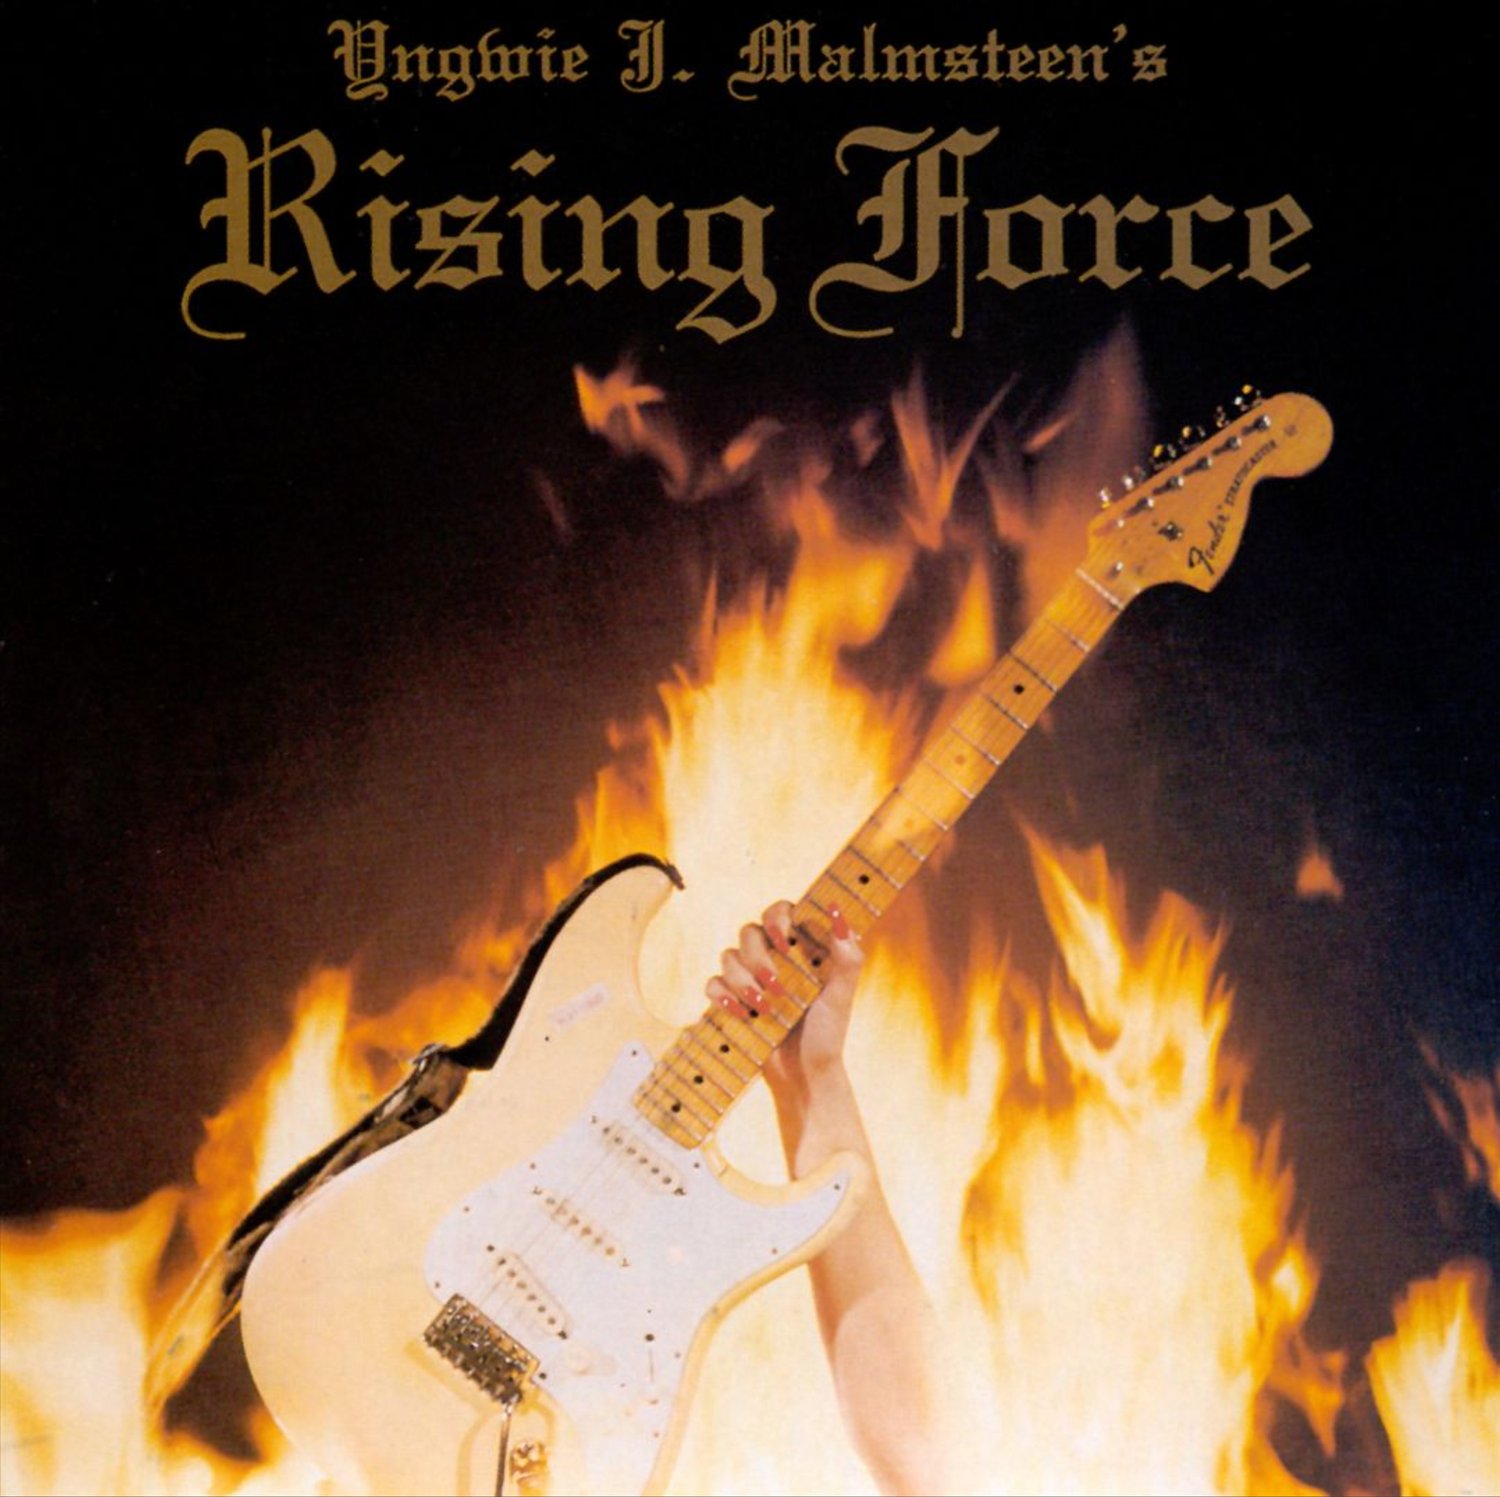 Vol 6, Bonus Track: ”Rising Force” by Yngwie Malmsteen